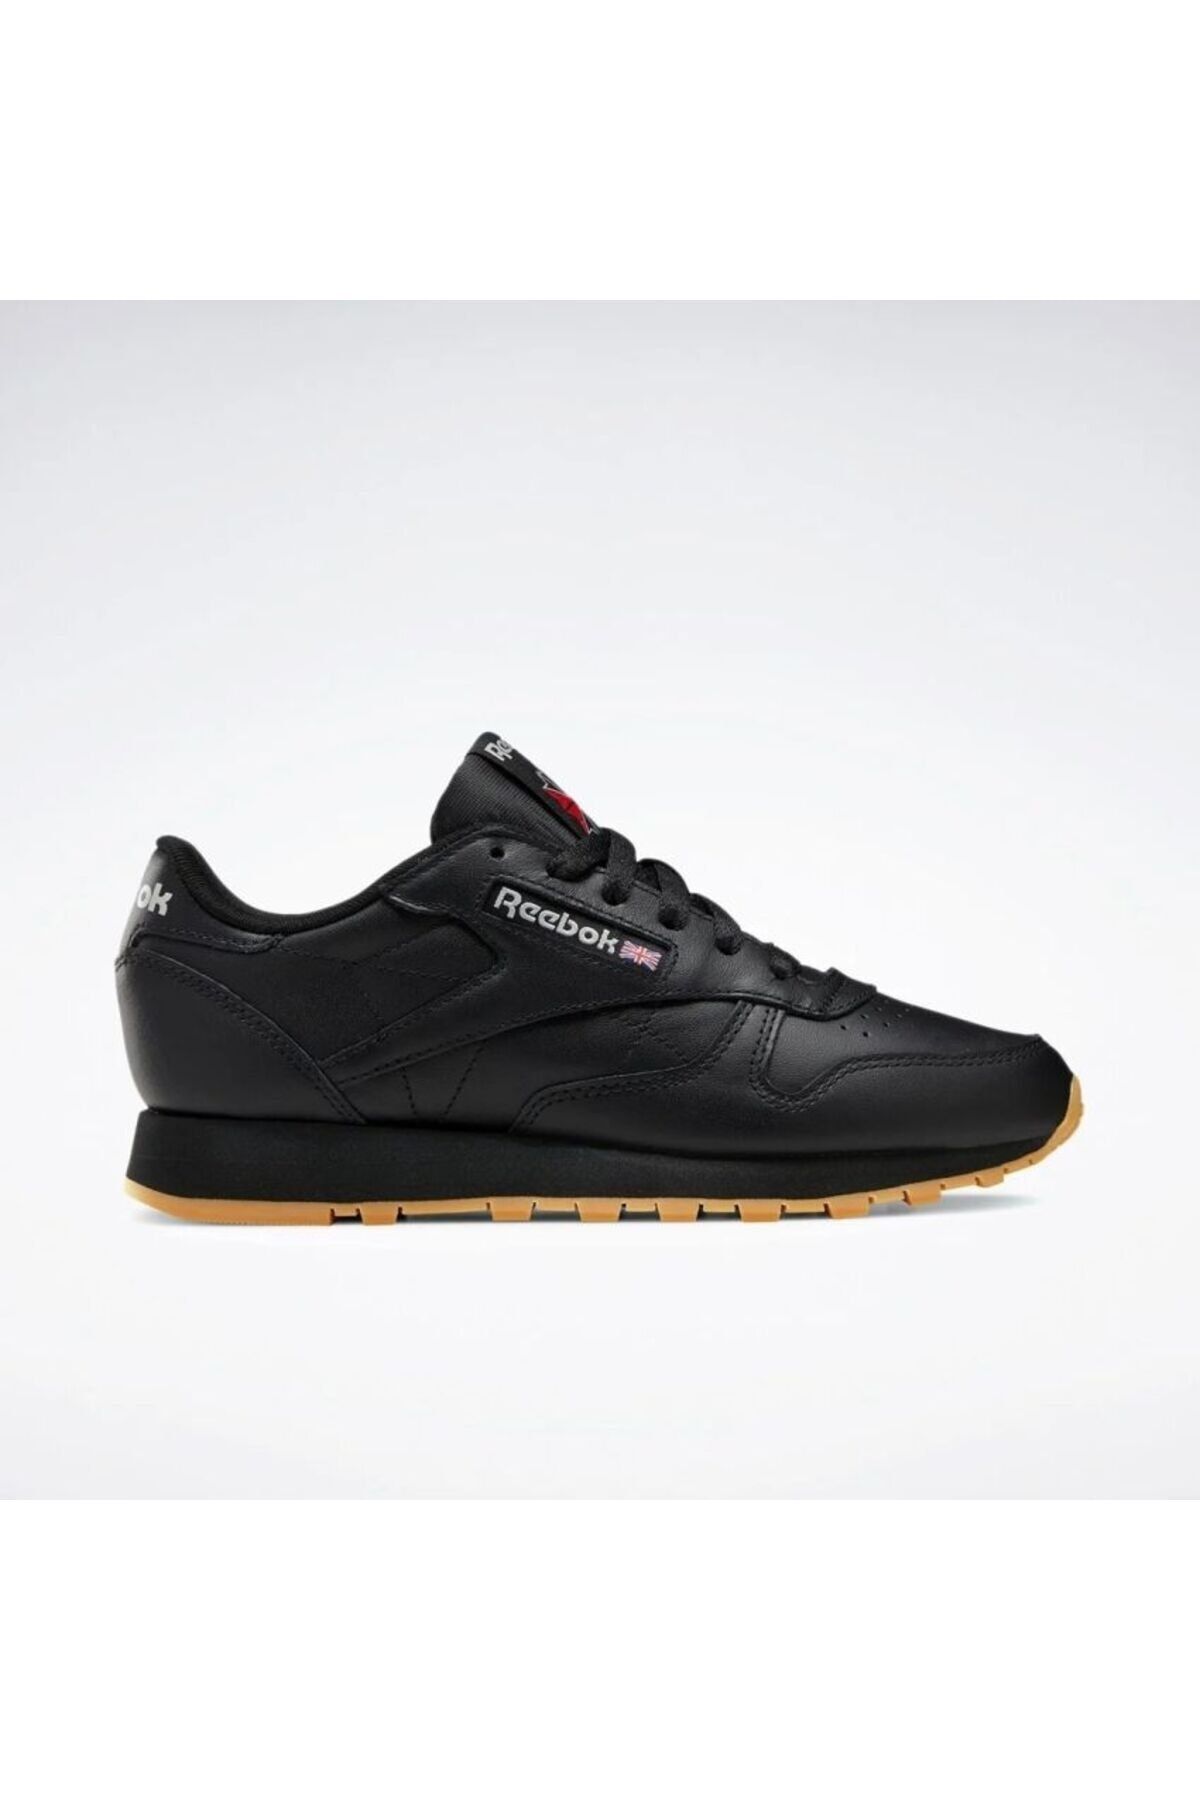 Reebok Classic Leather Siyah Unisex Sneaker 100008493